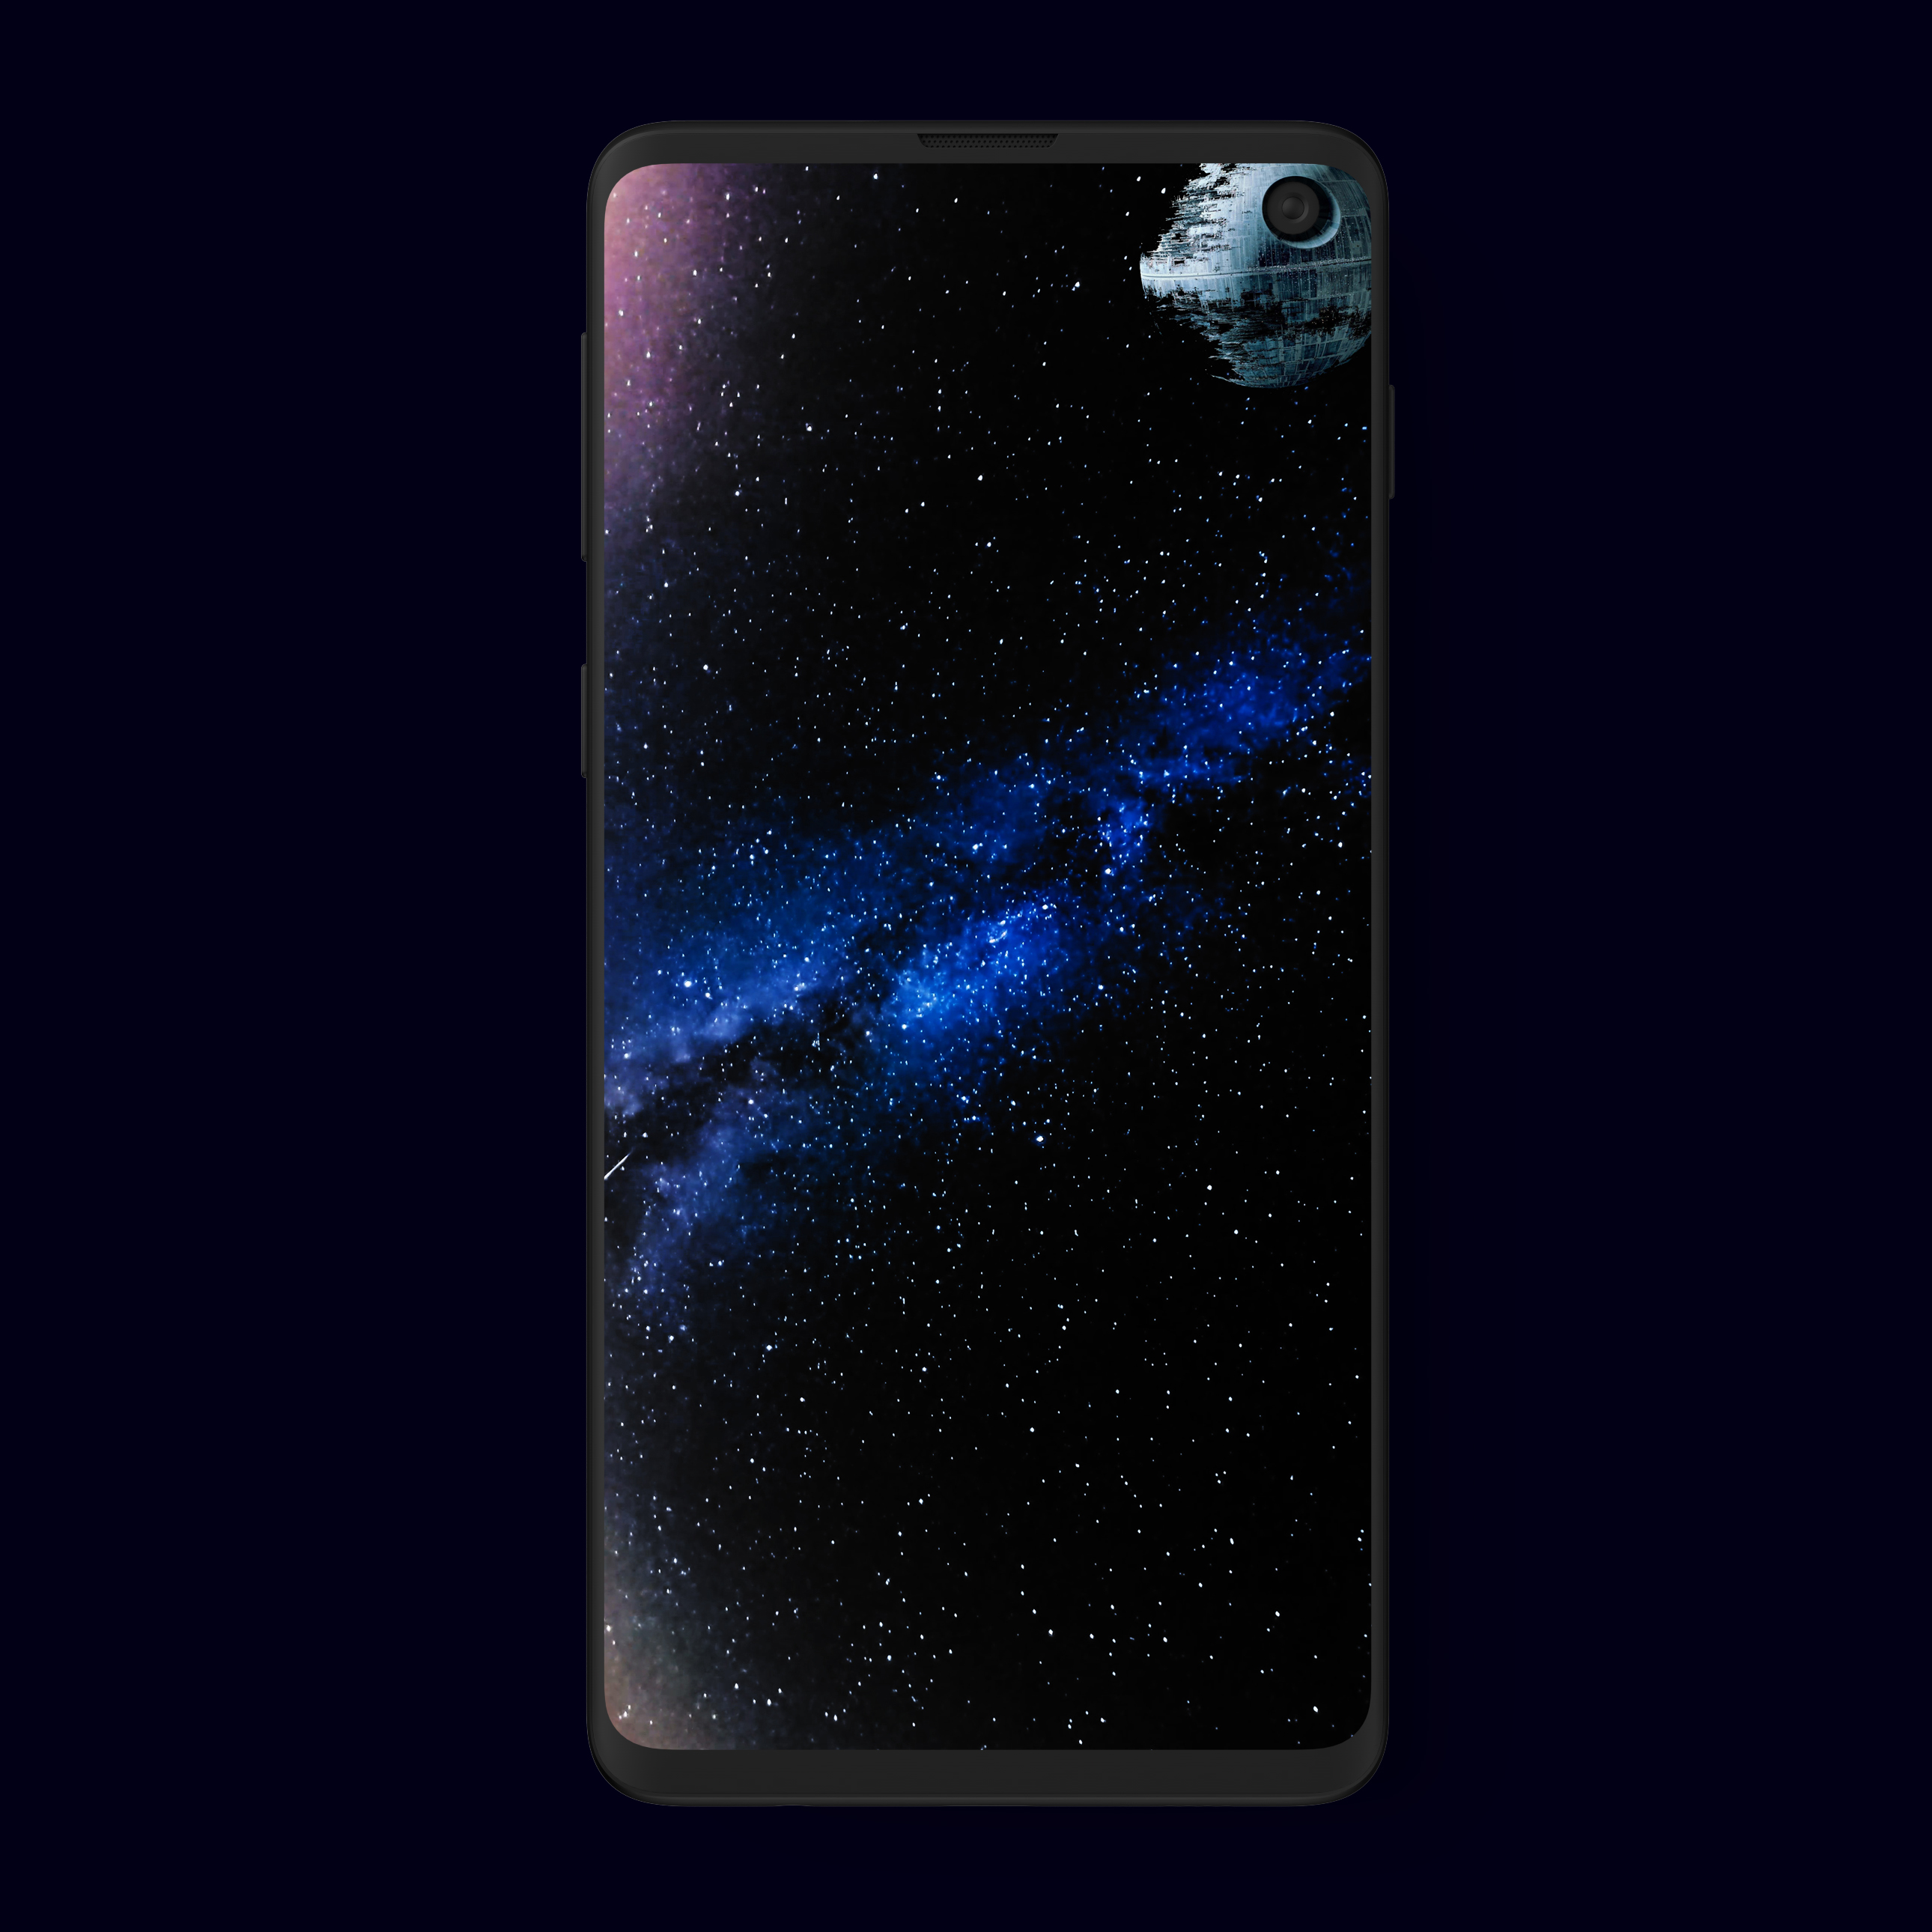 samsung galaxy wallpaper,caja del teléfono móvil,accesorios para teléfono móvil,artilugio,galaxia,objeto astronómico